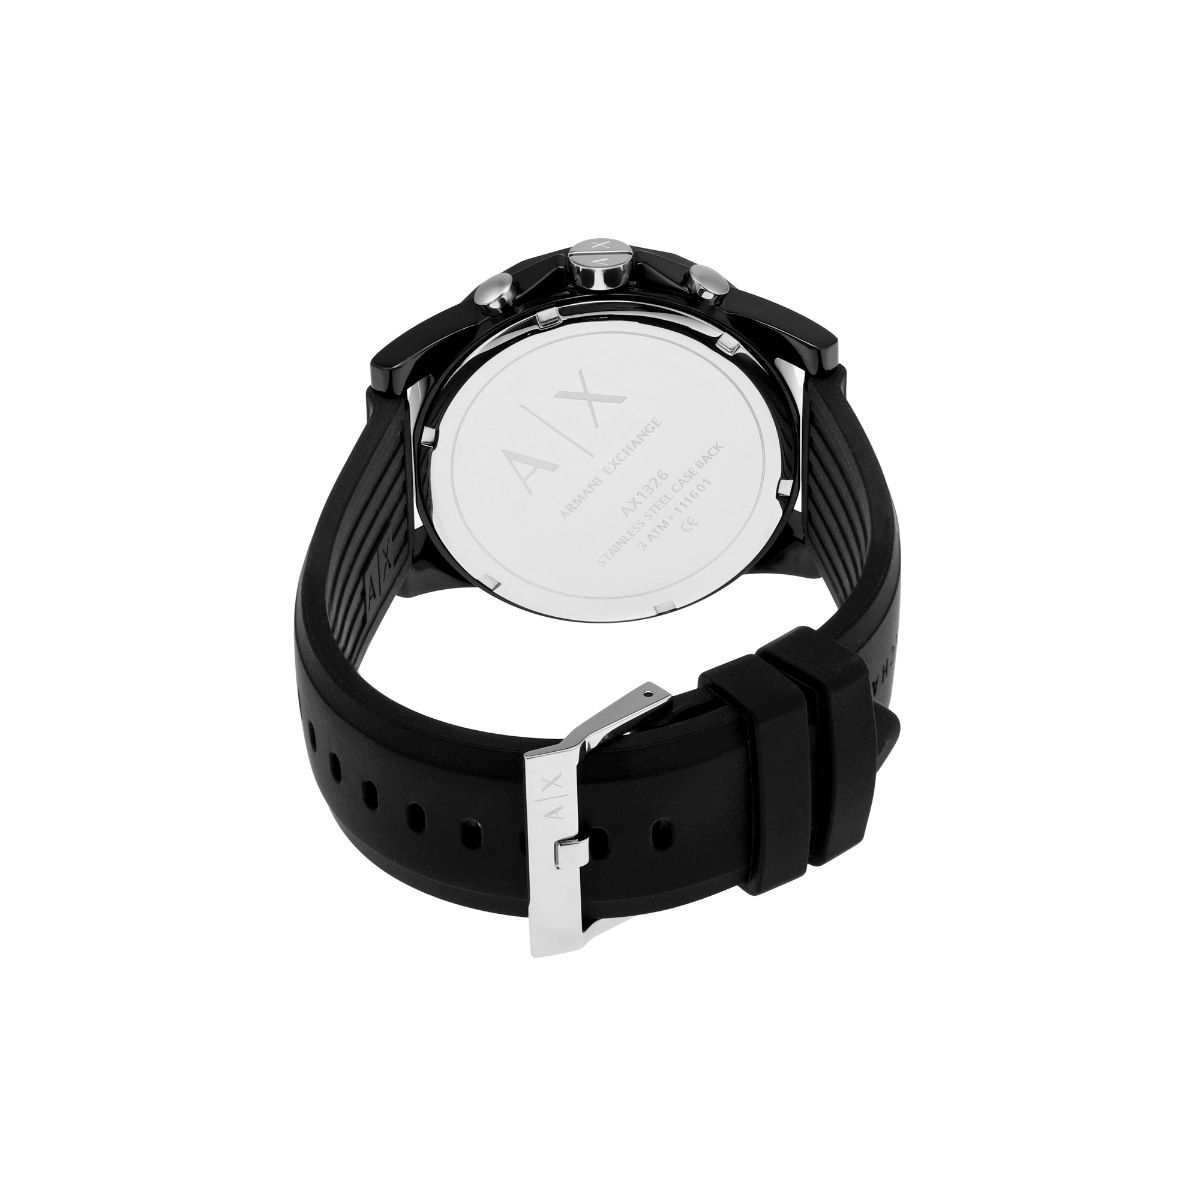 Buy Armani Exchange Analog Black Dial Men's Watch-AX1722 at Amazon.in